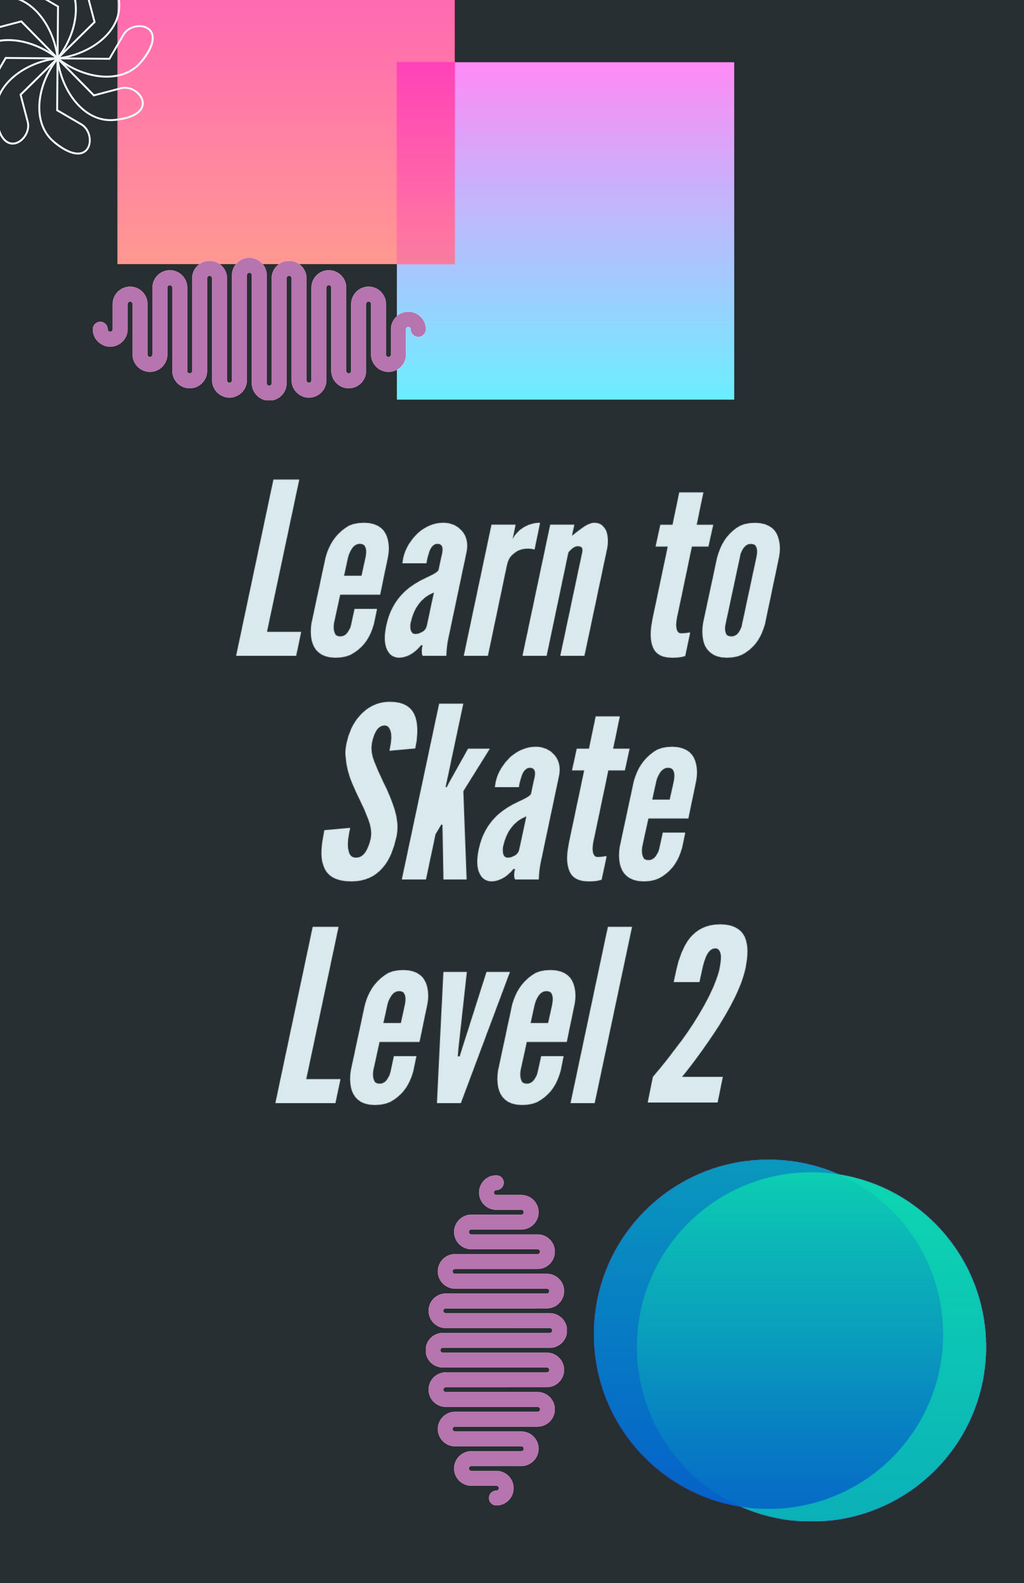 Learn to Skate Level 2 - 4 Week Program